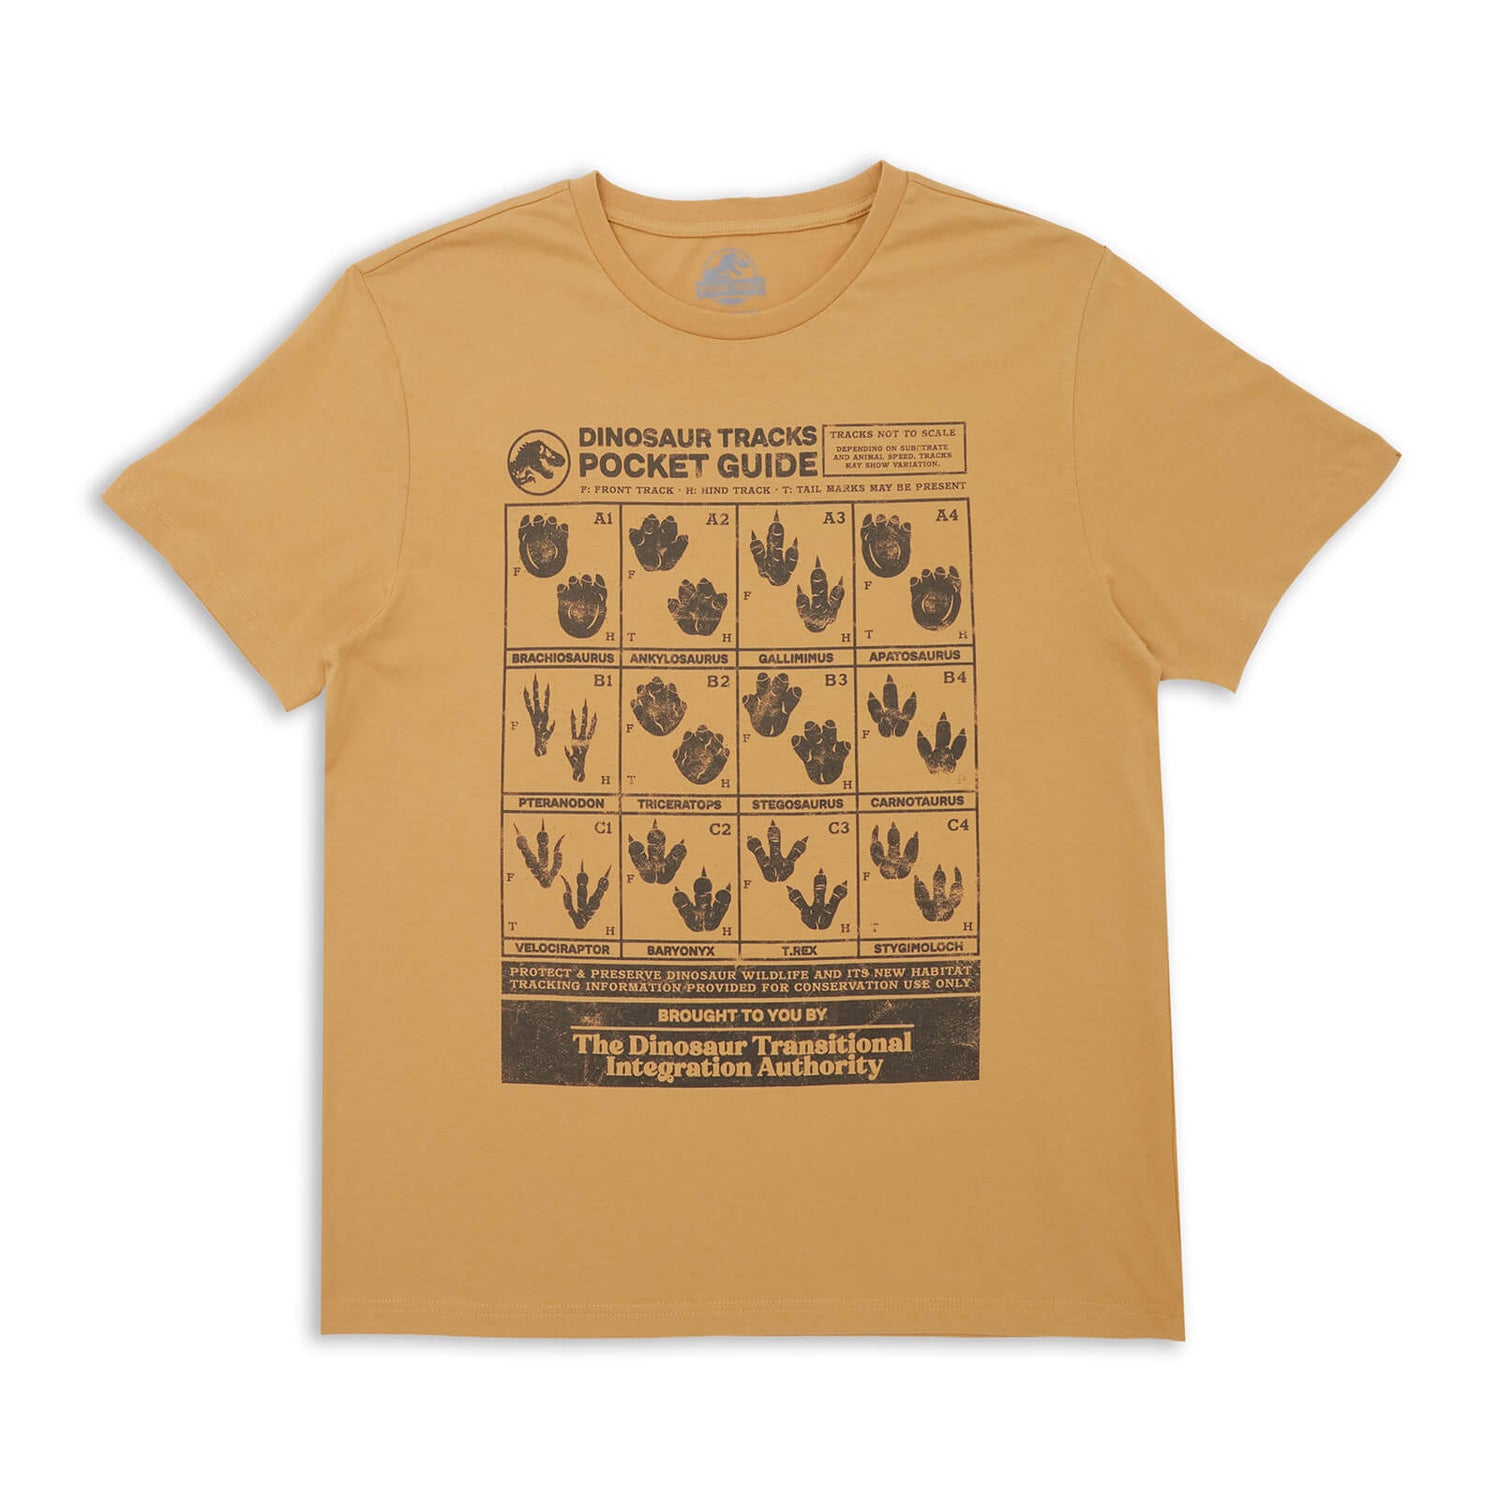 Jurassic World Dino Tracks Pocket Guide Men's T-Shirt - Tan